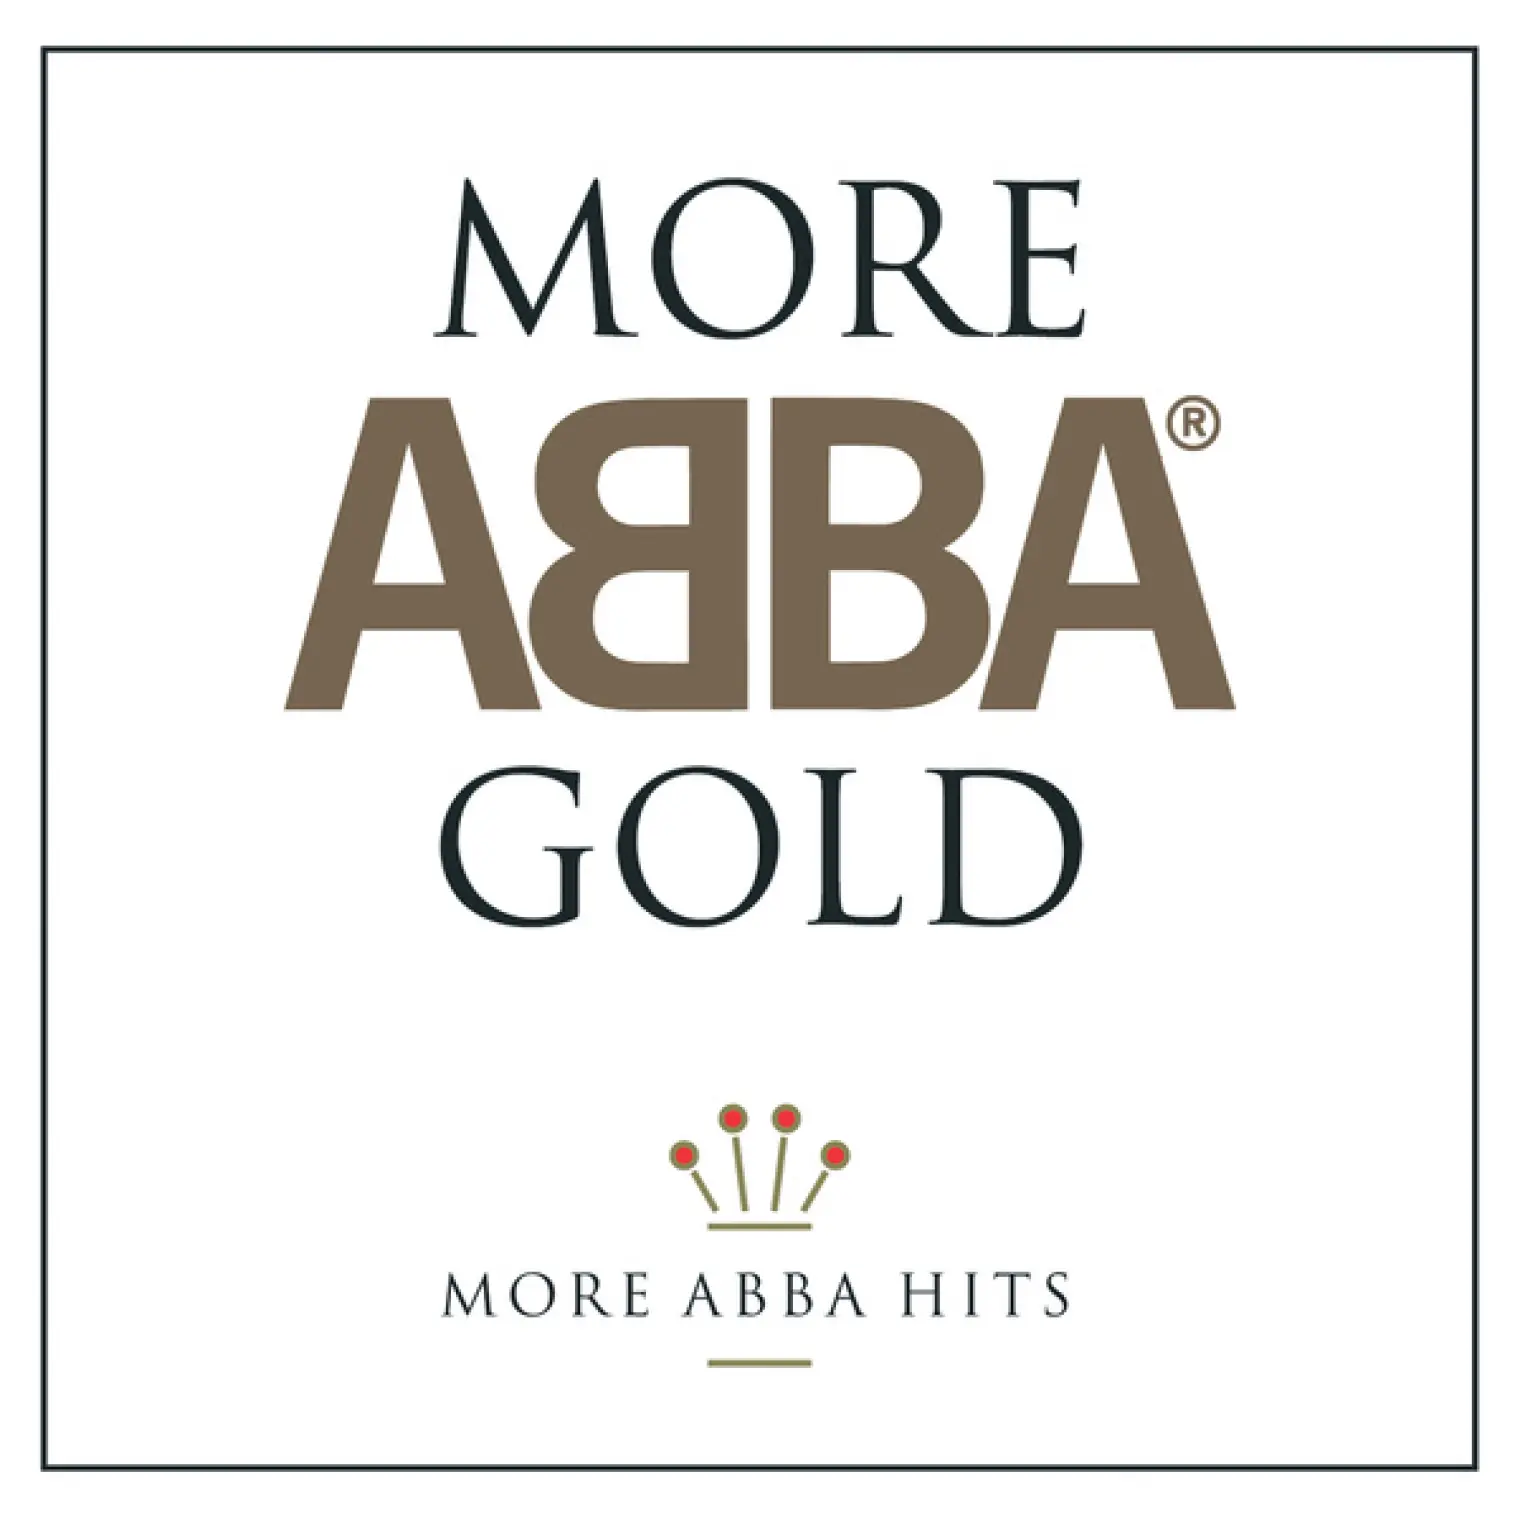 More ABBA Gold -  Abba 